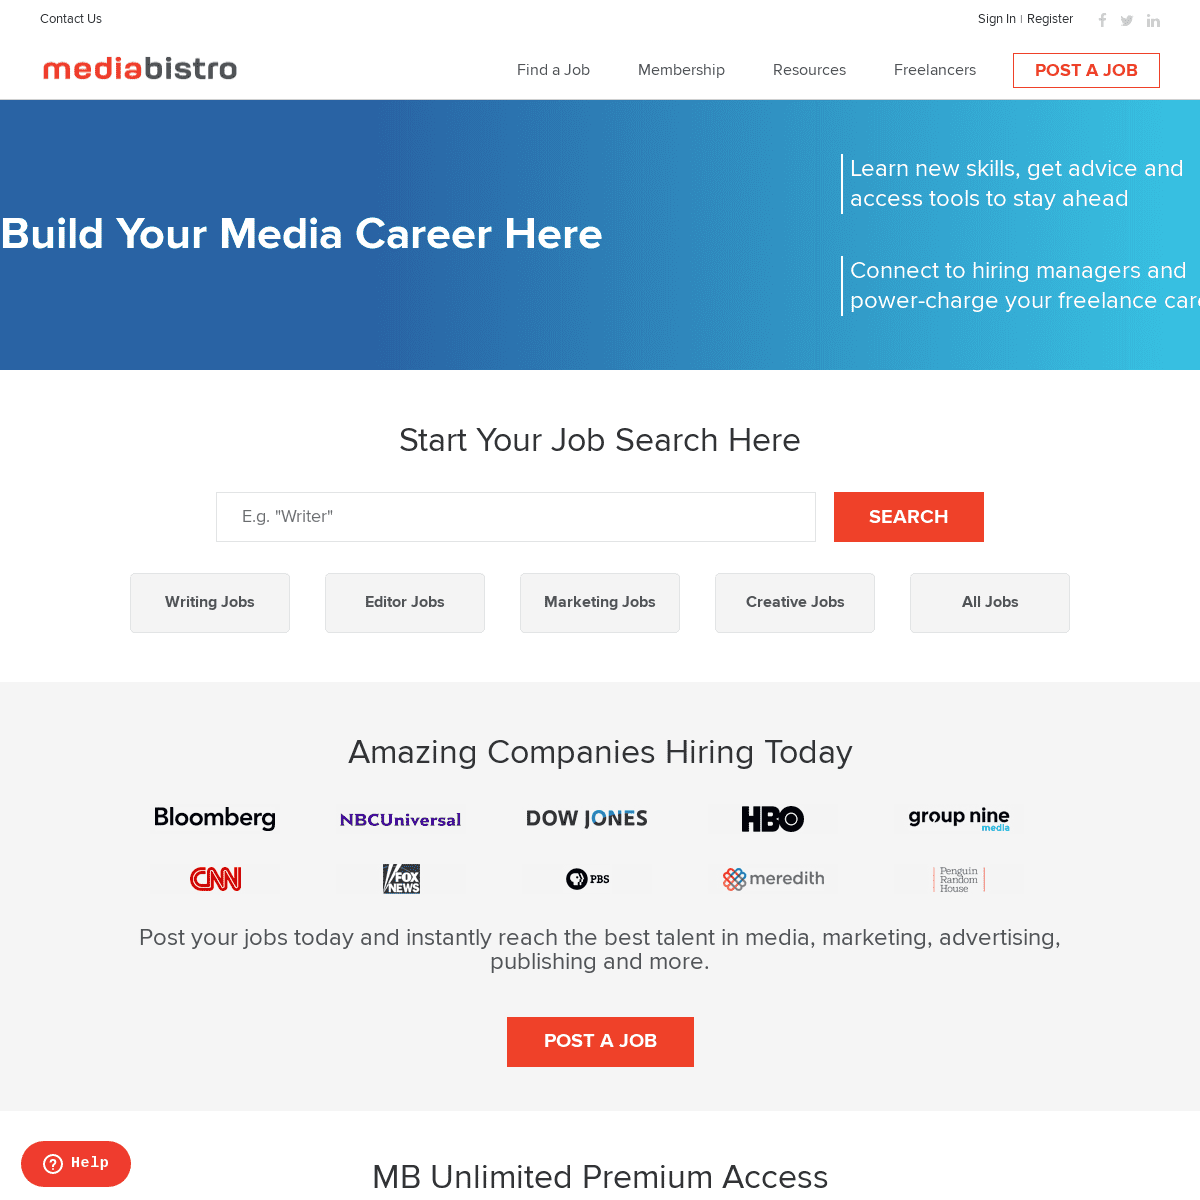 A complete backup of mediabistro.com